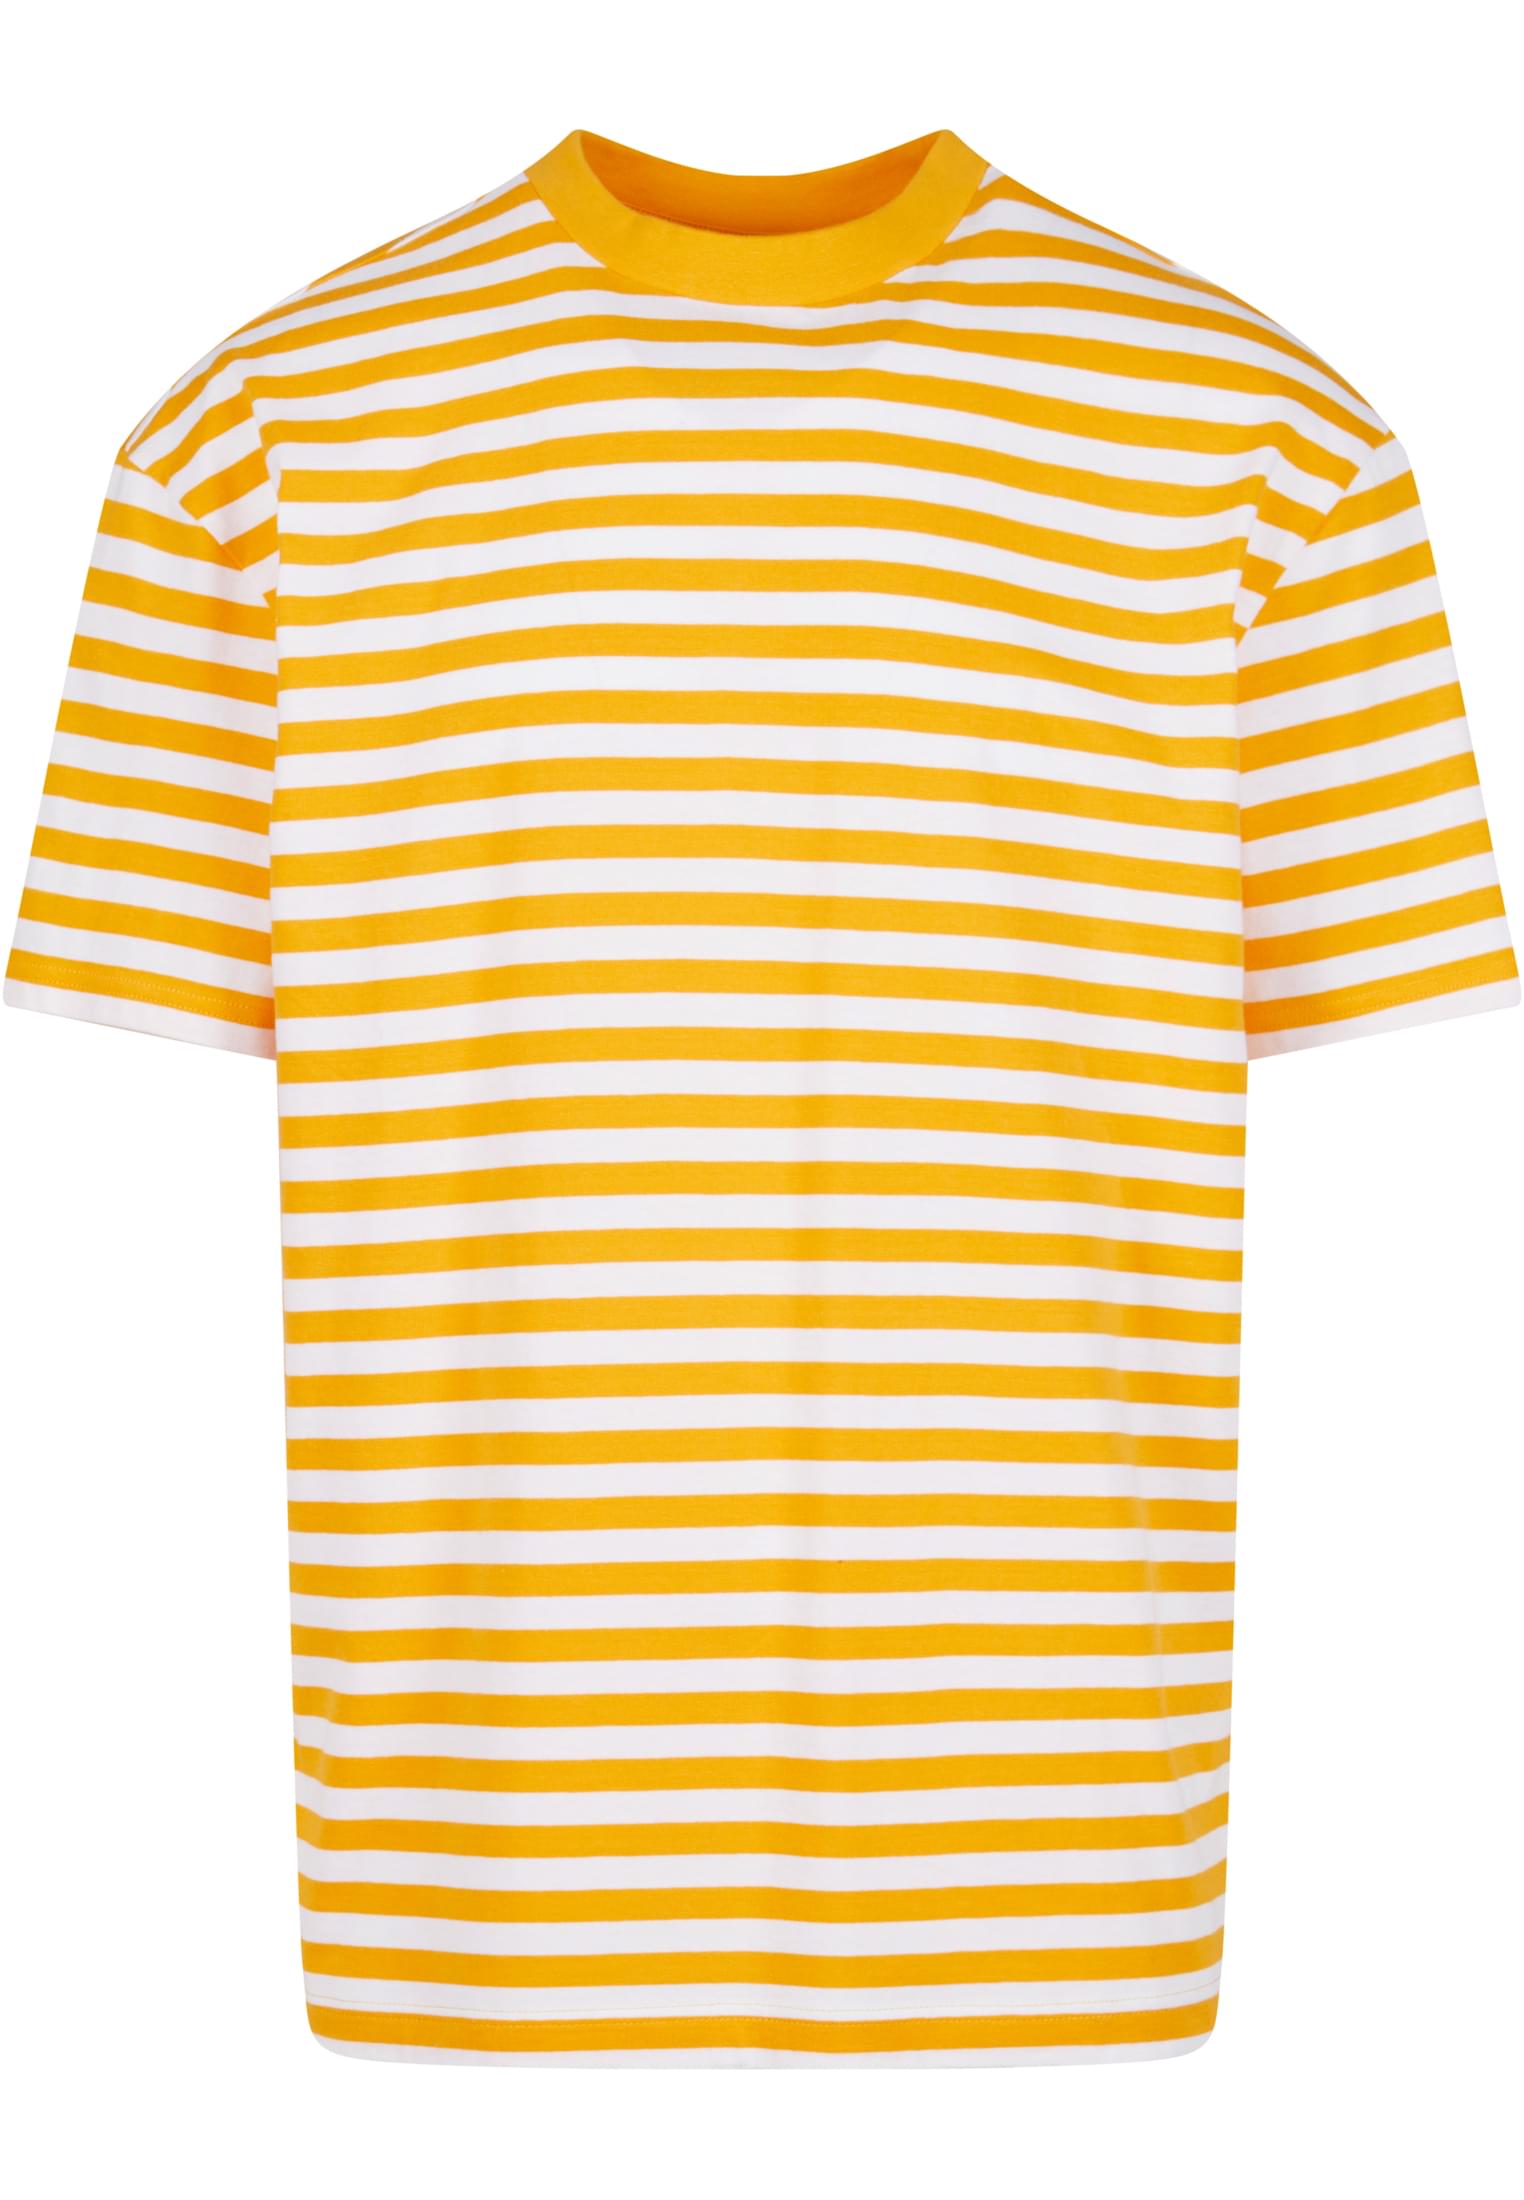 Men's T-shirt Regular Stripe - white/yellow im Sale-uc men 1